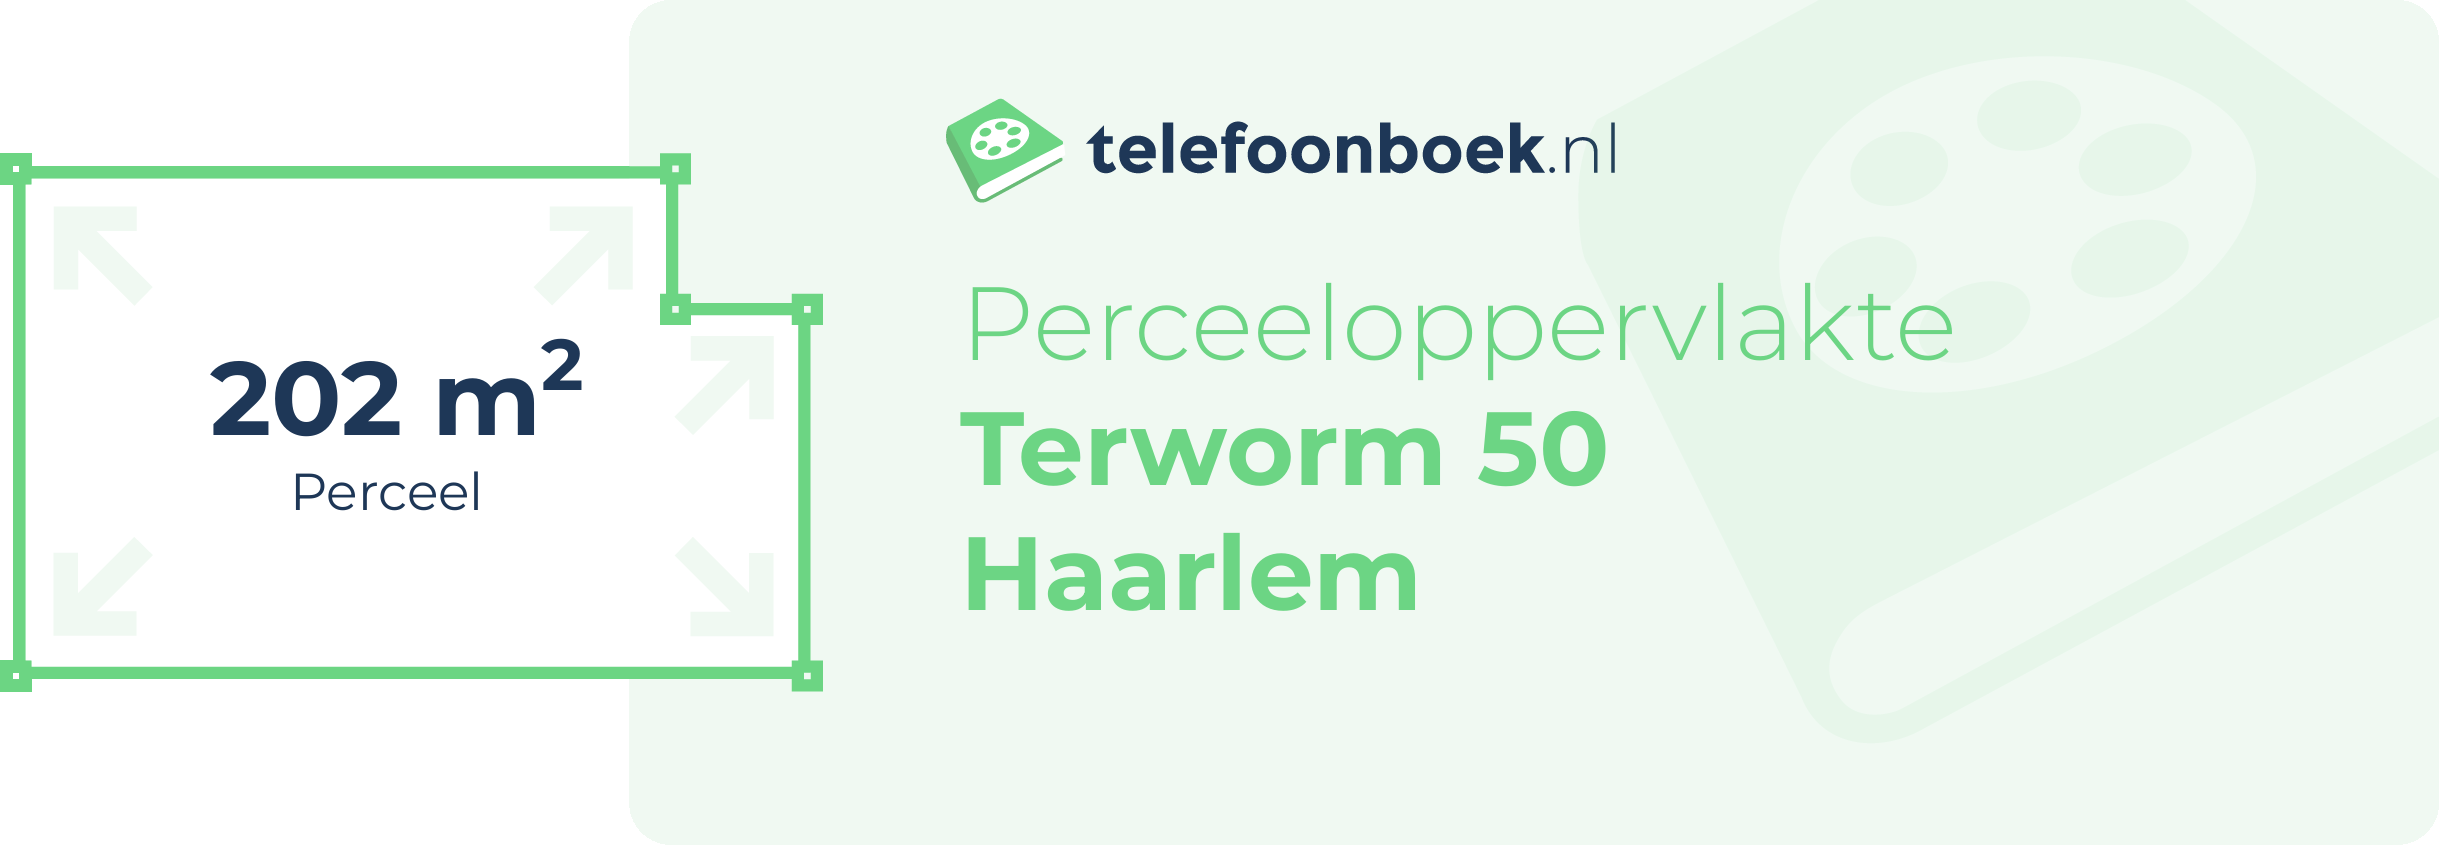 Perceeloppervlakte Terworm 50 Haarlem